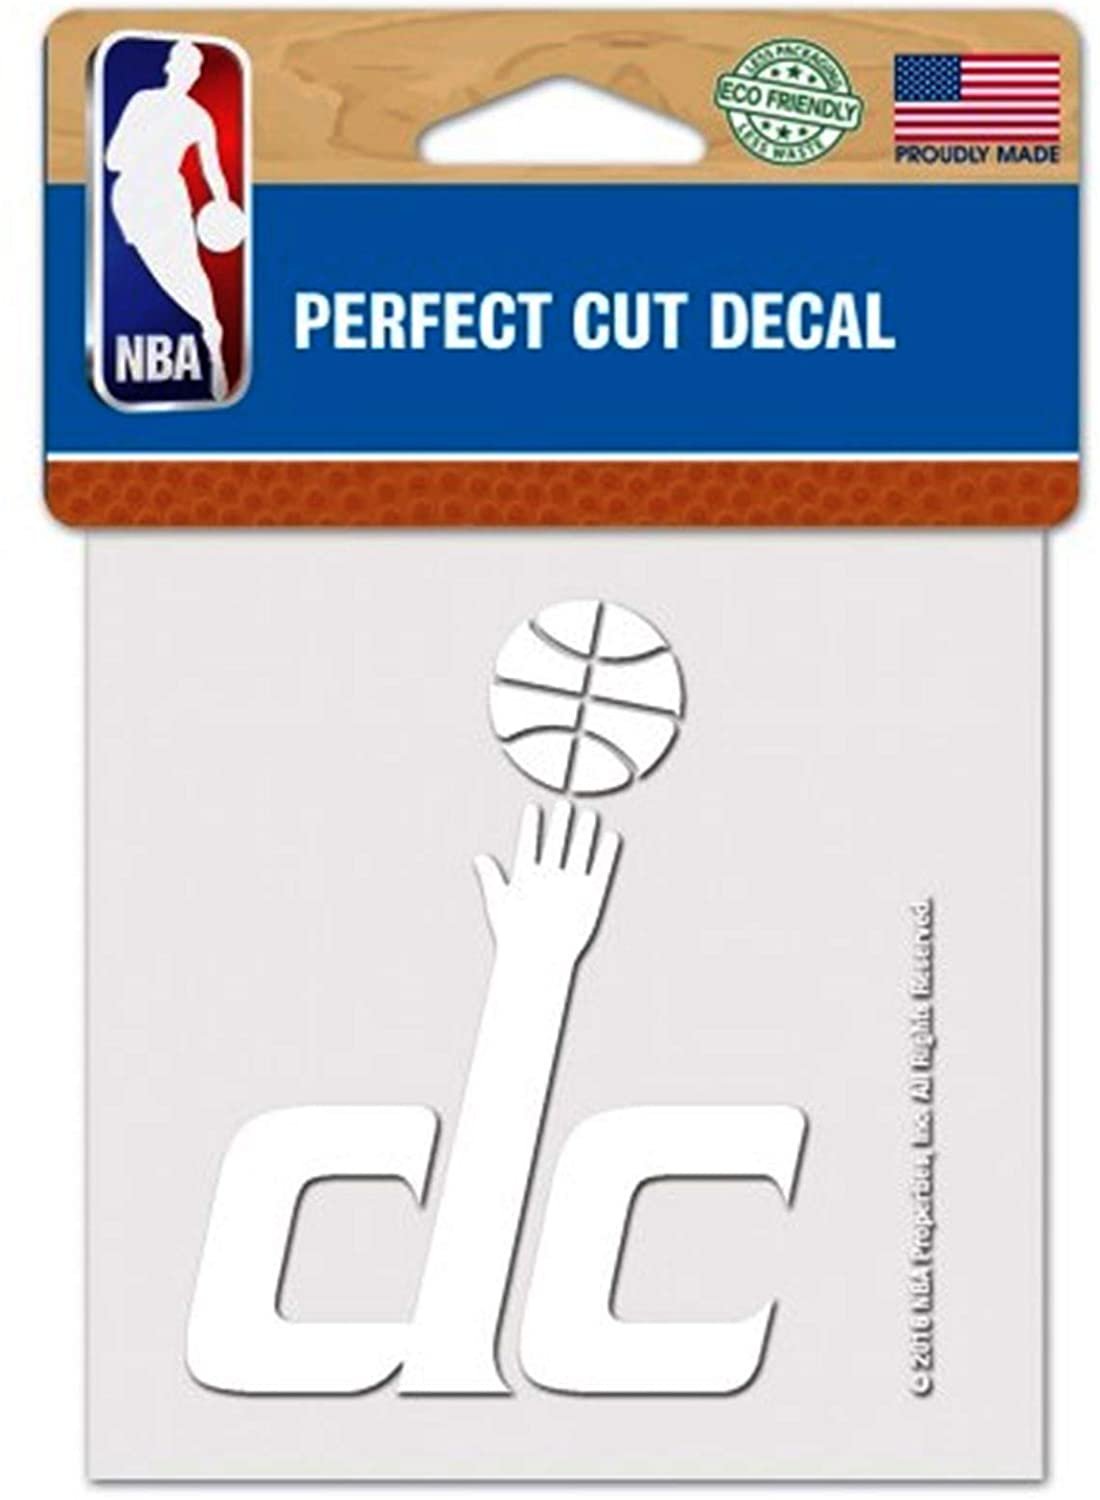 Washington Wizards 4x4 Inch Die Cut Decal Sticker, White Logo, Clear Backing